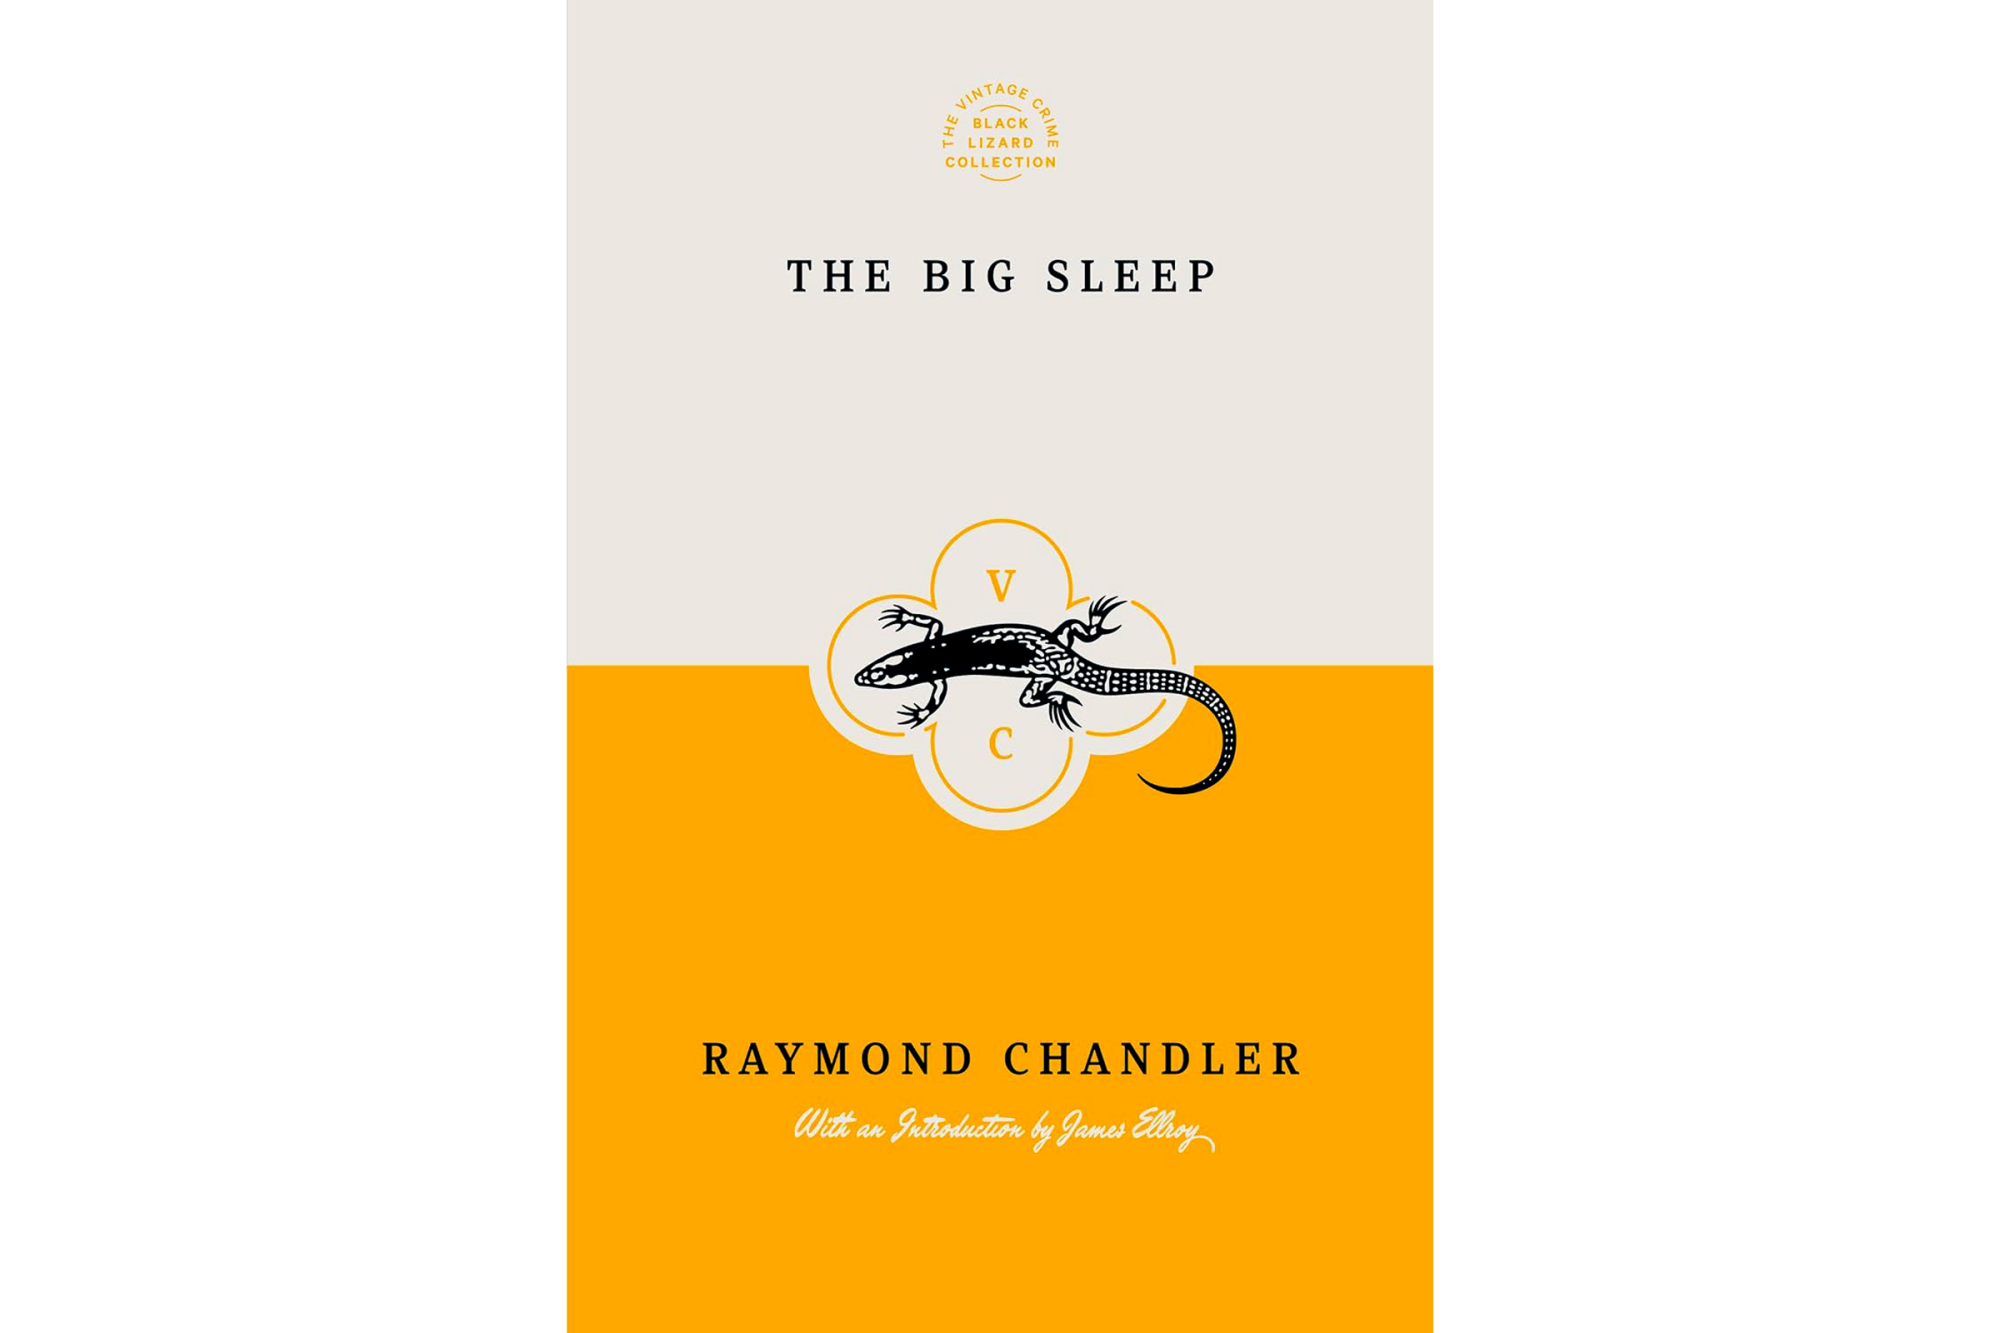 "The Big Sleep" by Raymond Chandler